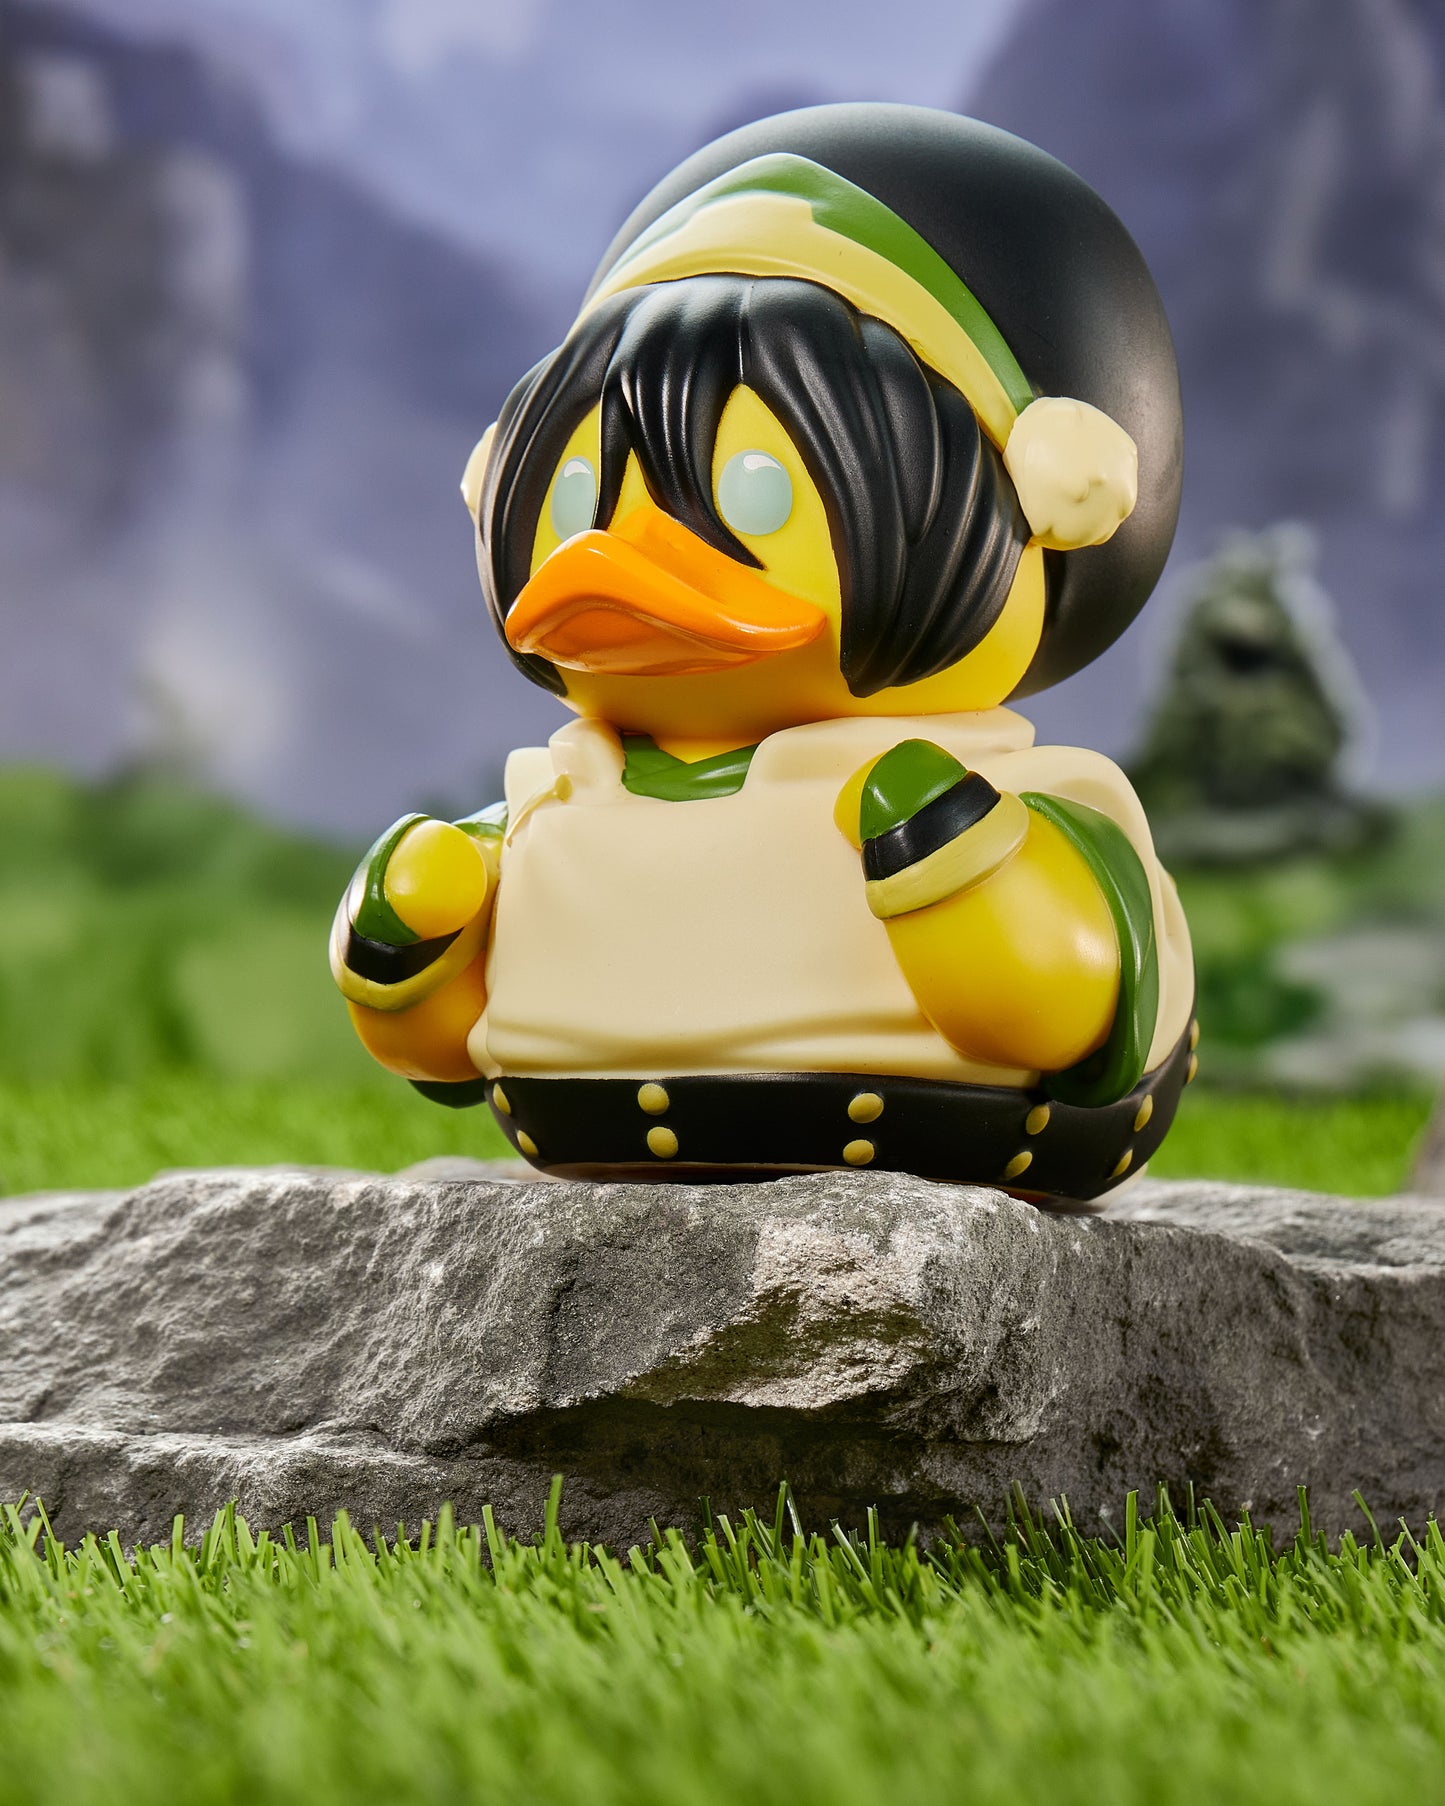 Ducks Avatar: The Last Airbender - PRE-ORDER*